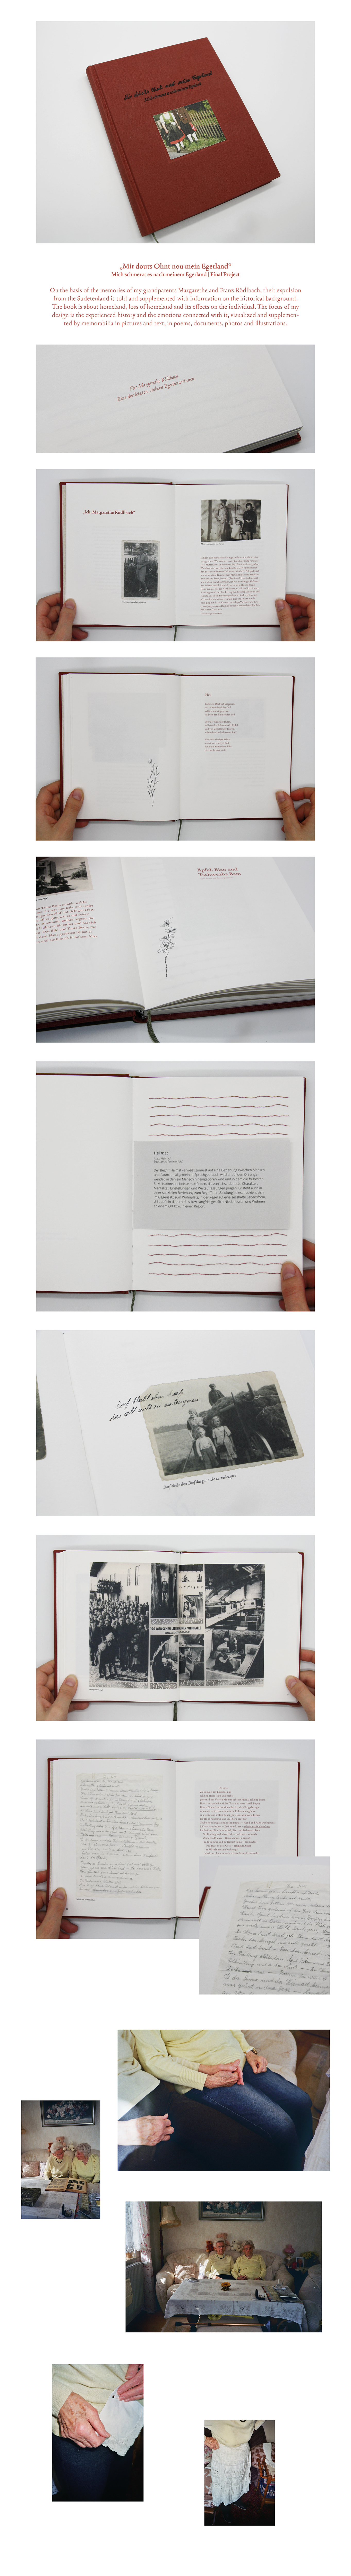 bookcover Bookdesign expulsion Flucht grandparents memories sudetenland Vertreibung heimat homeland